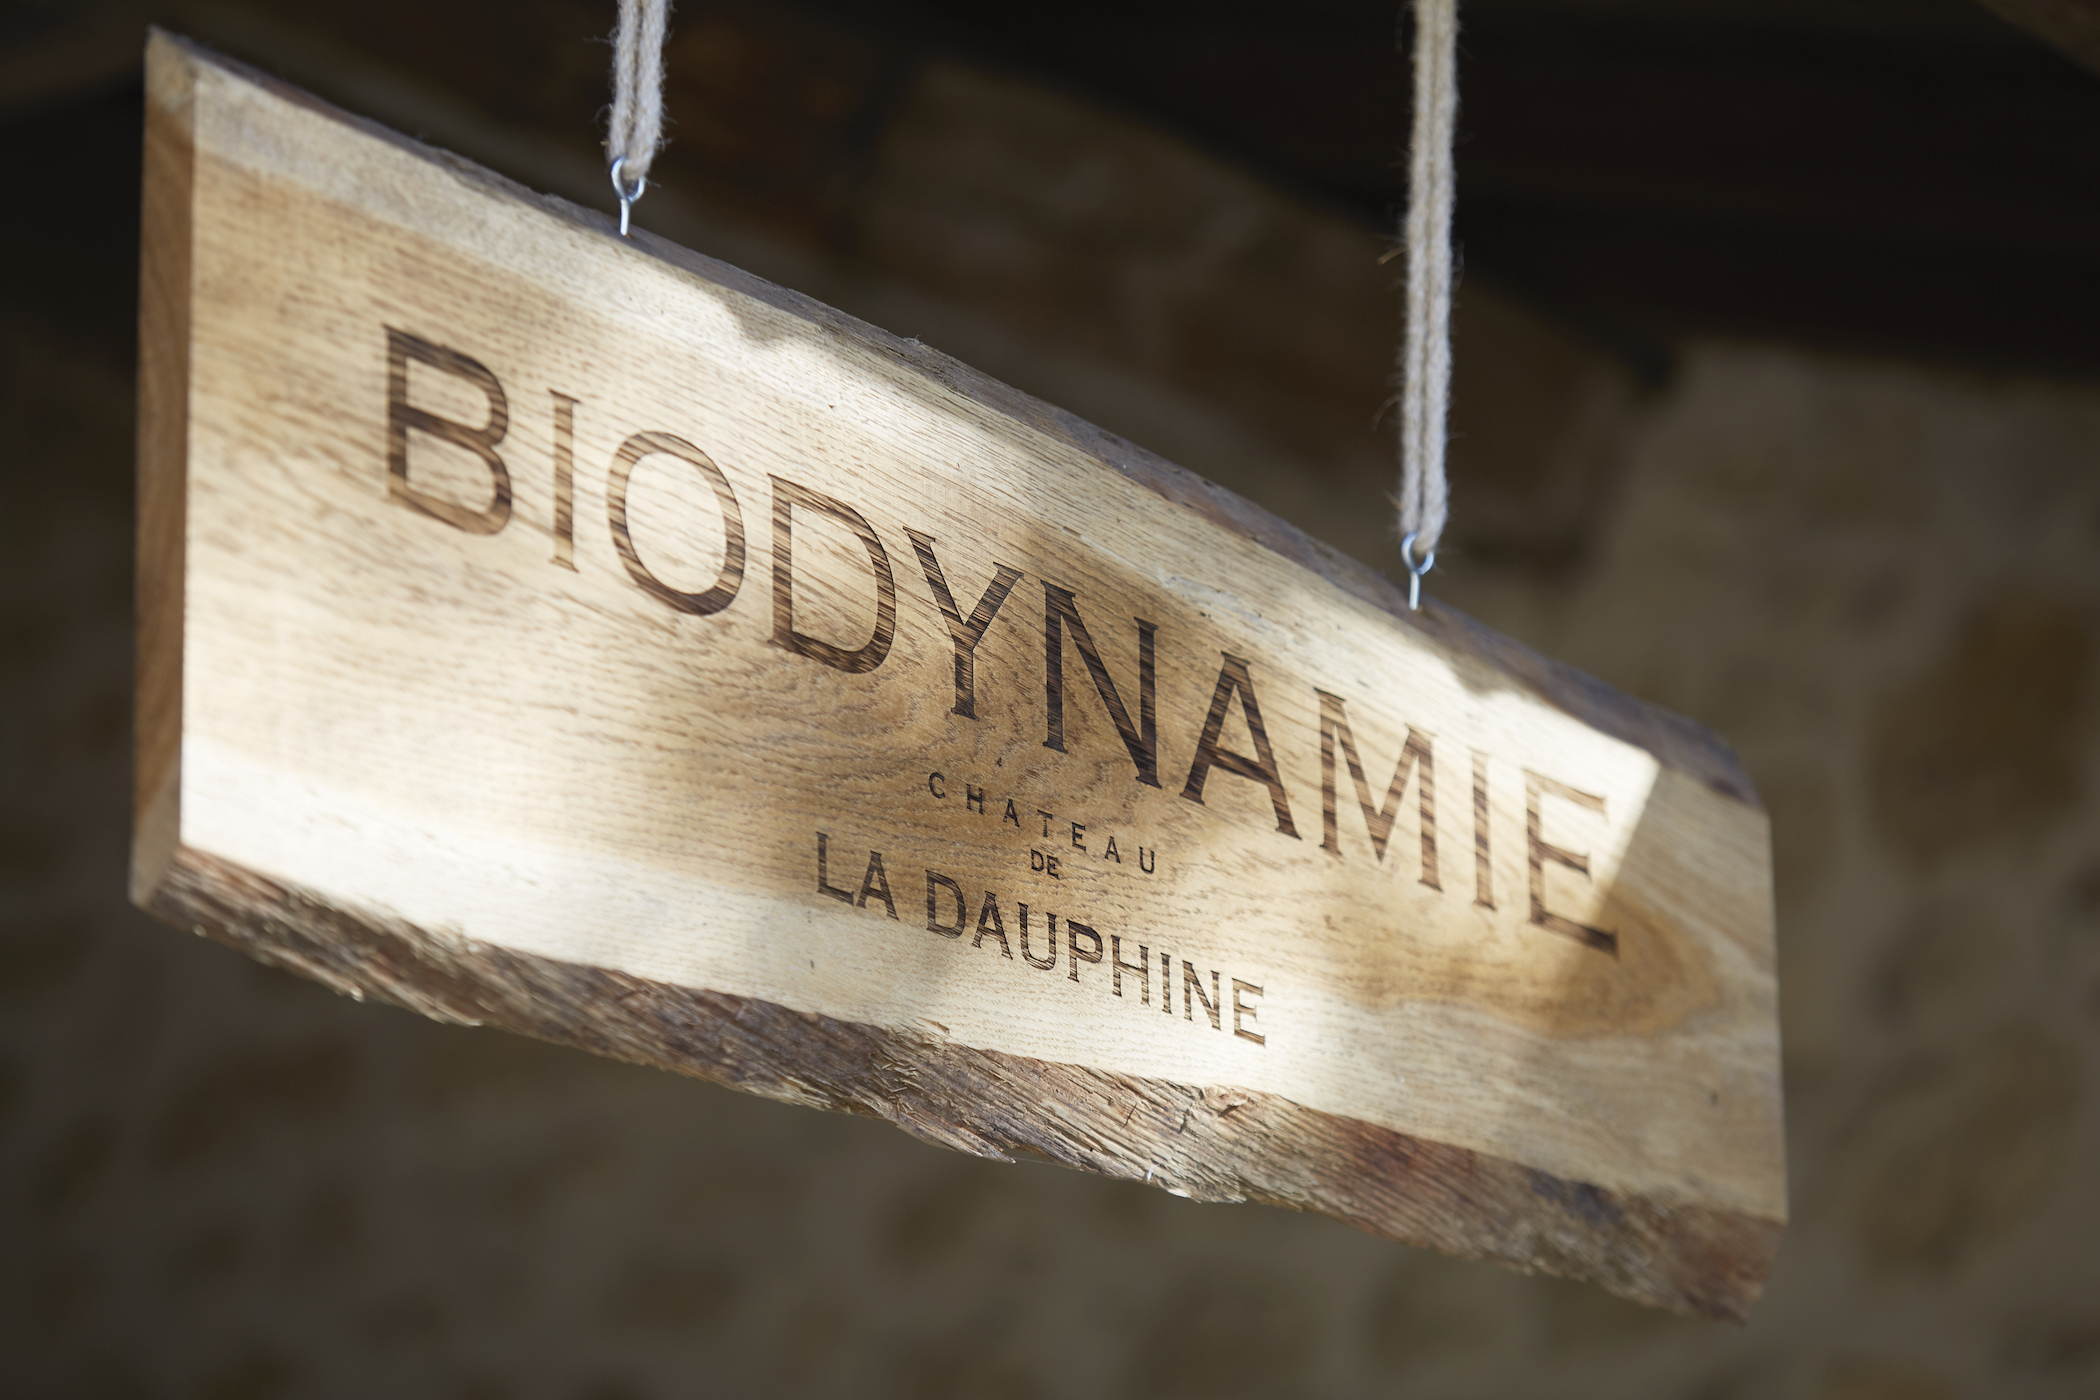 Biodynamic philosophies put to practice @ladauphine